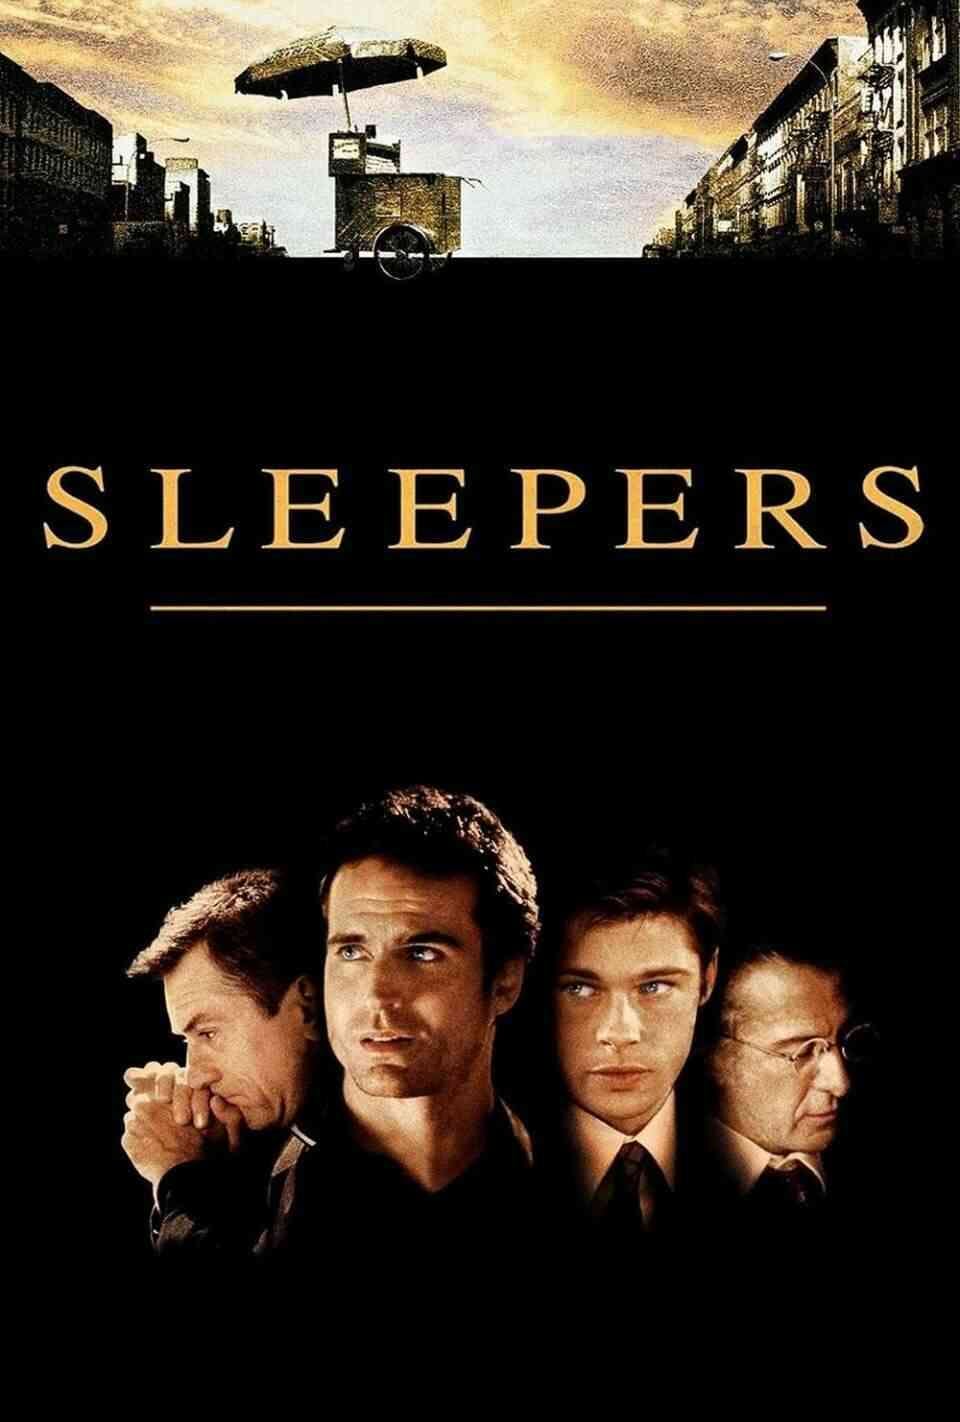 Read Sleepers screenplay (poster)